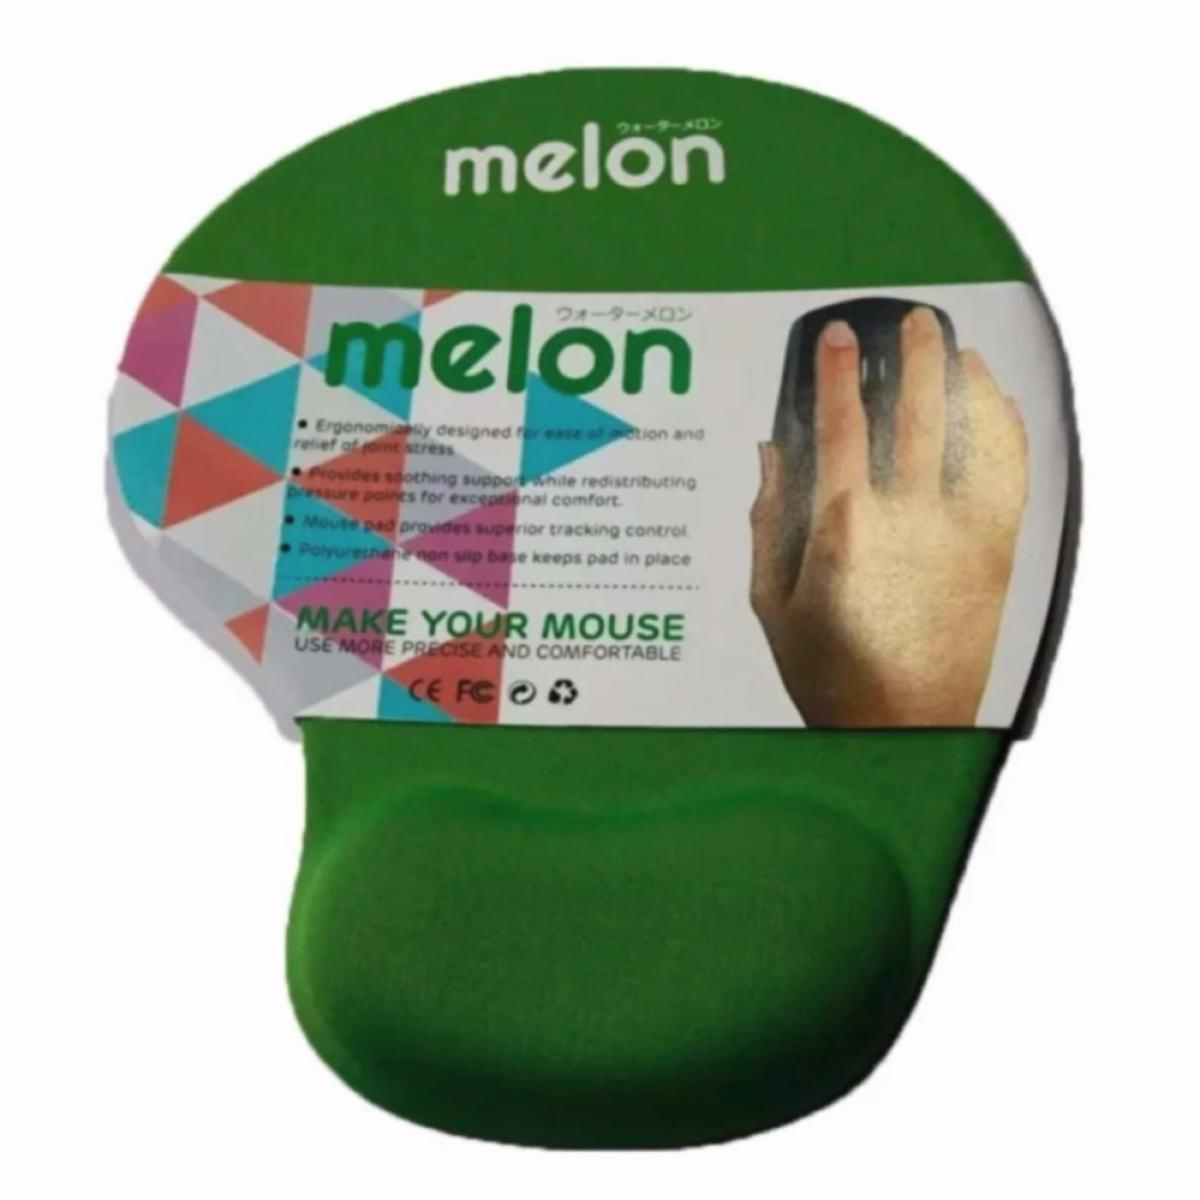 Melon แผ่นรองเม้าส์พร้อมเจลรองข้อมือ Mouse Pad with Gel Wrist Support รุ่น ML-200